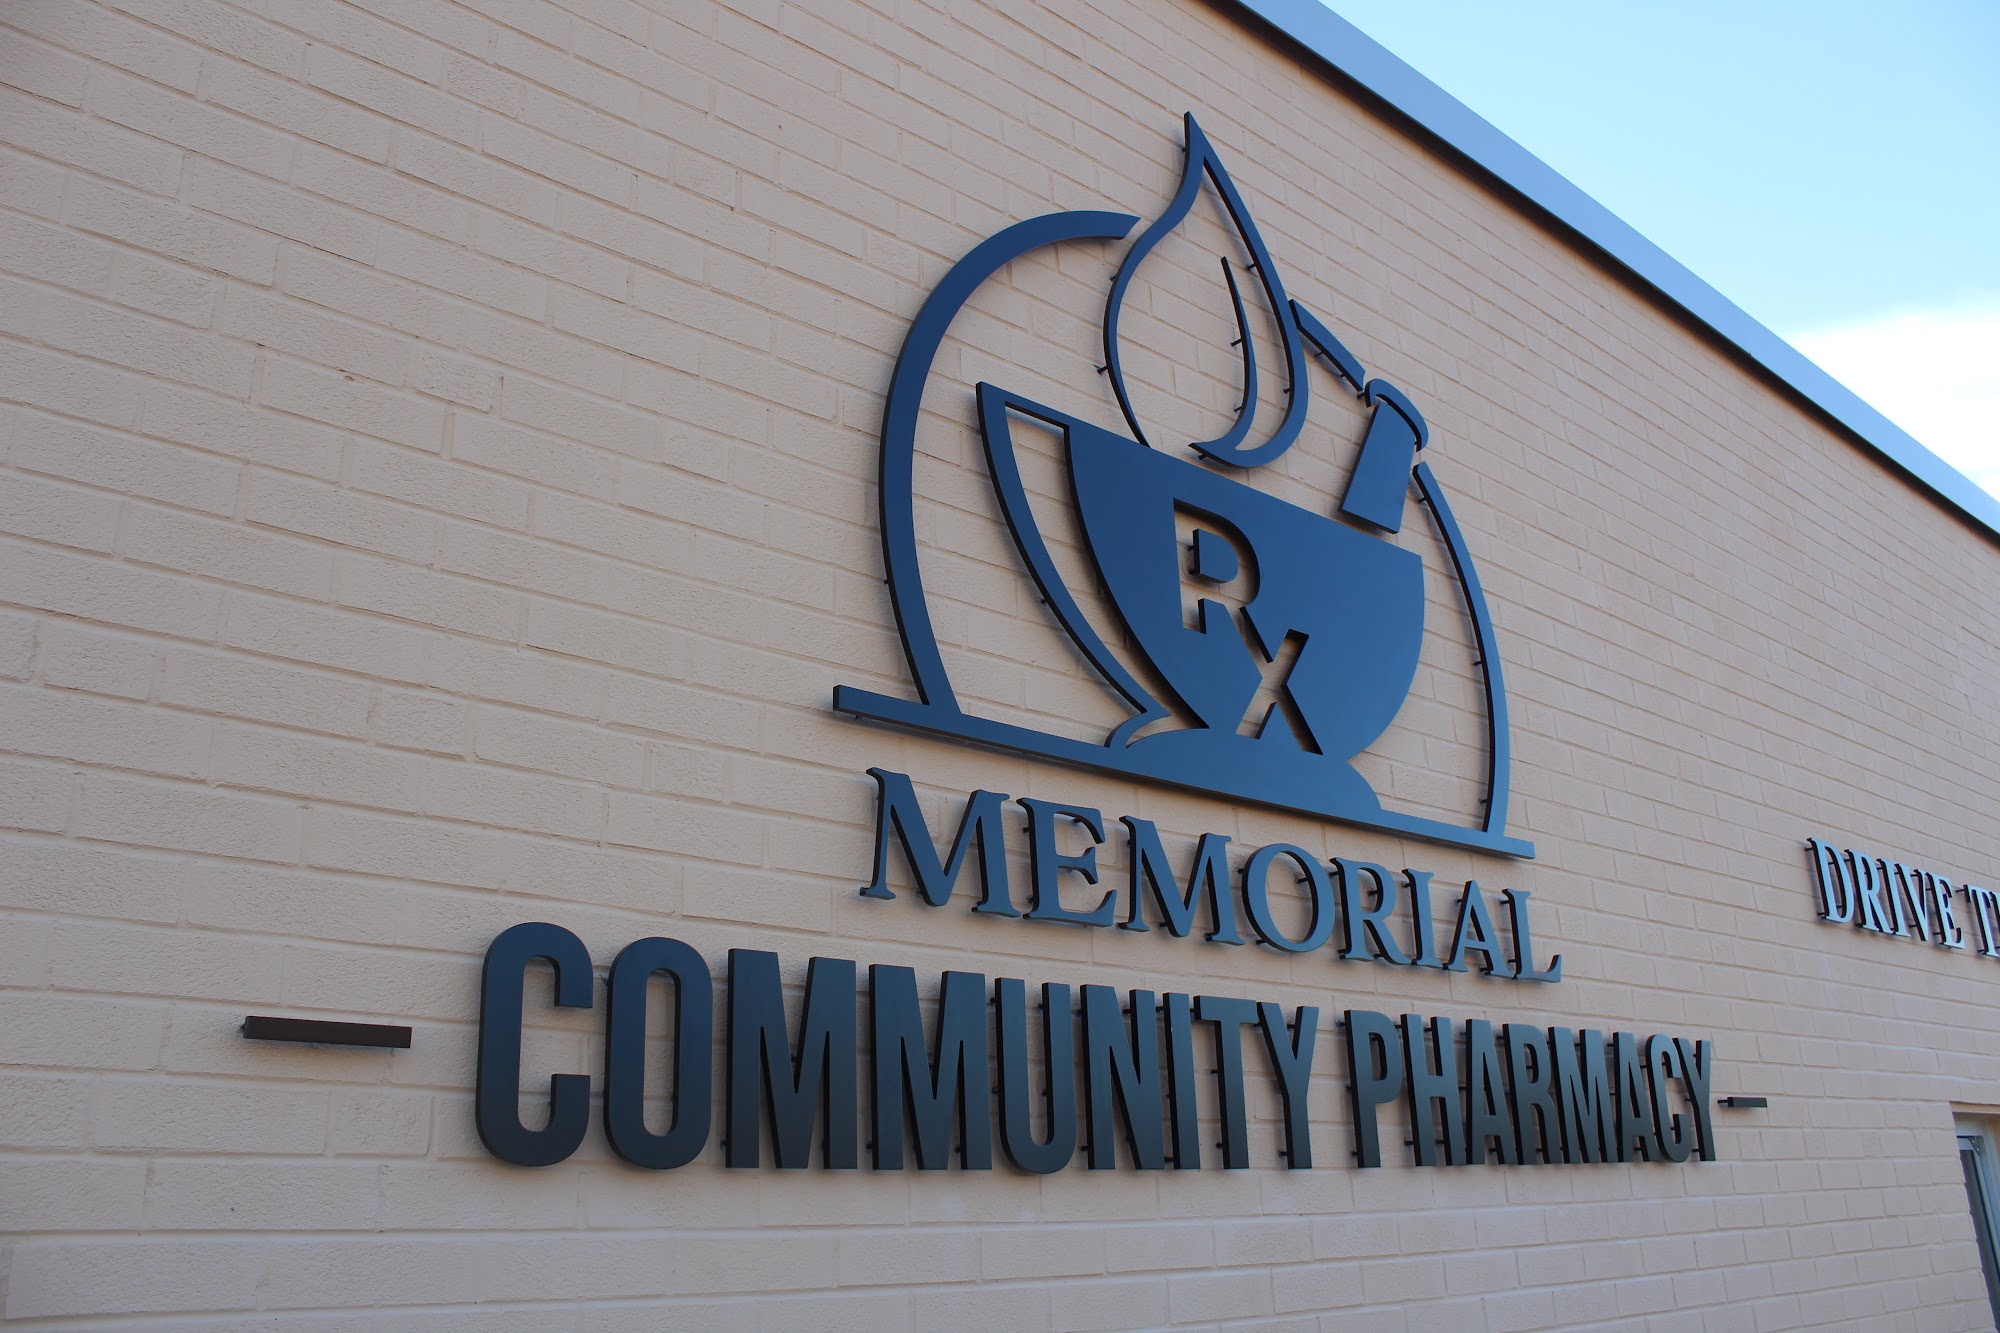 Memorial Community Pharmacy